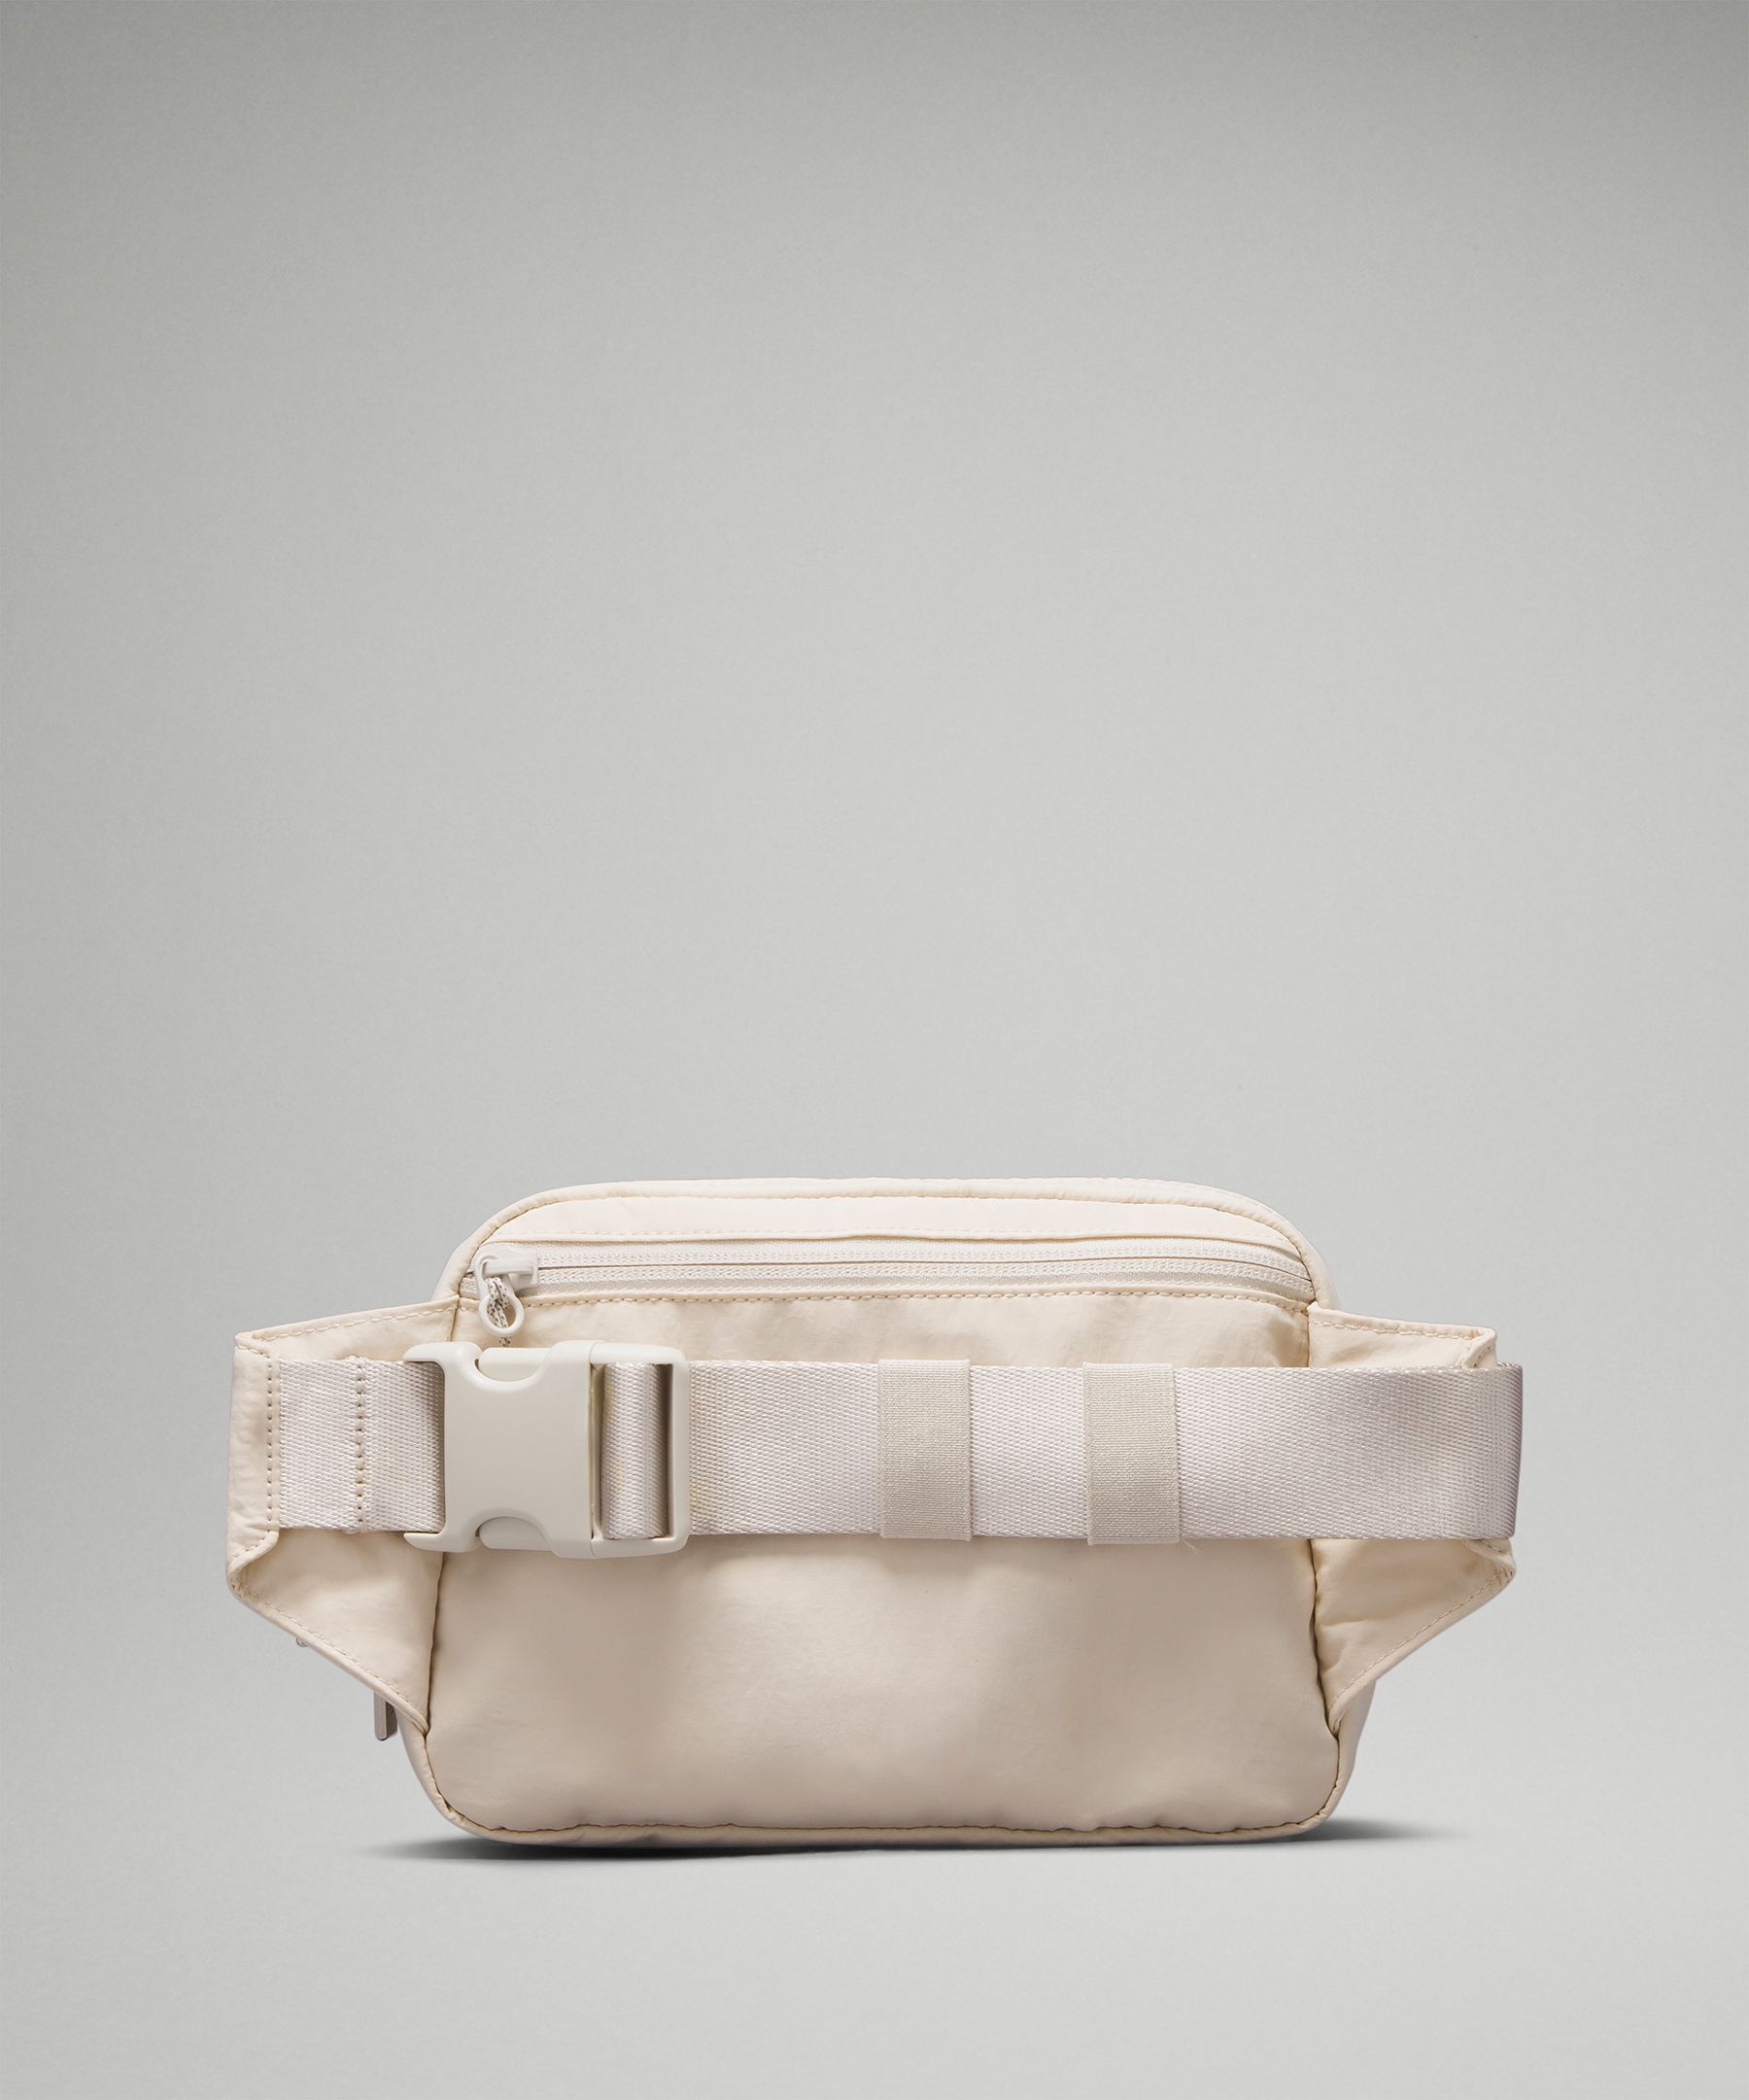 Lululemon Everywhere Belt Bag  Plus Size Body 16-18 (Apple Shape